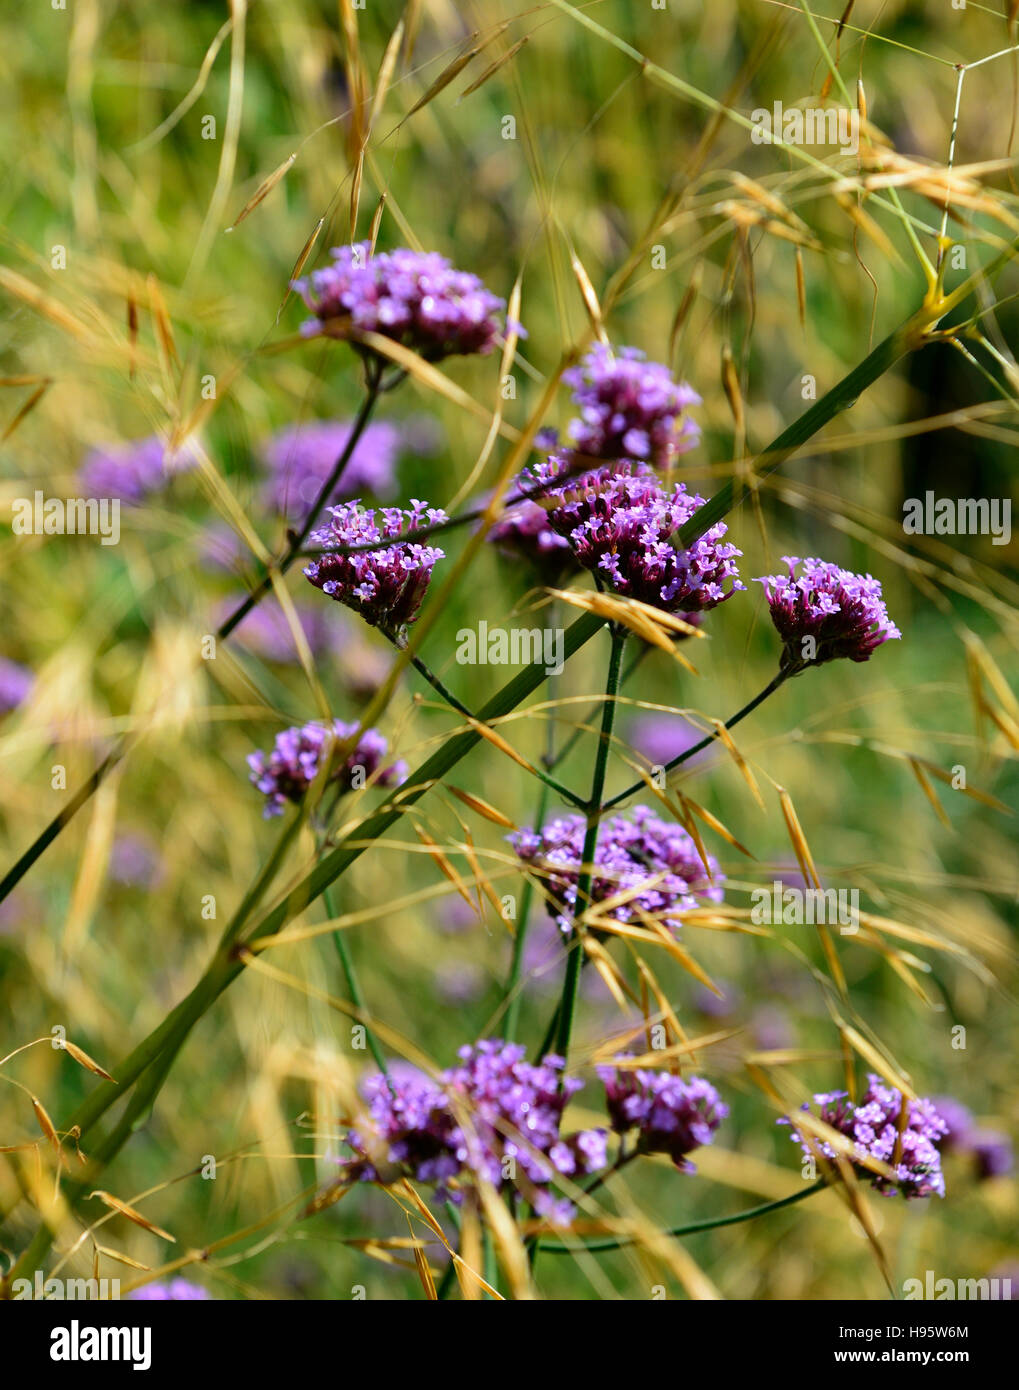 verbena bonariensis stipa tenuissima tall perennial purple flower flowers grass grasses mixed planting prairie style RM Floral Stock Photo